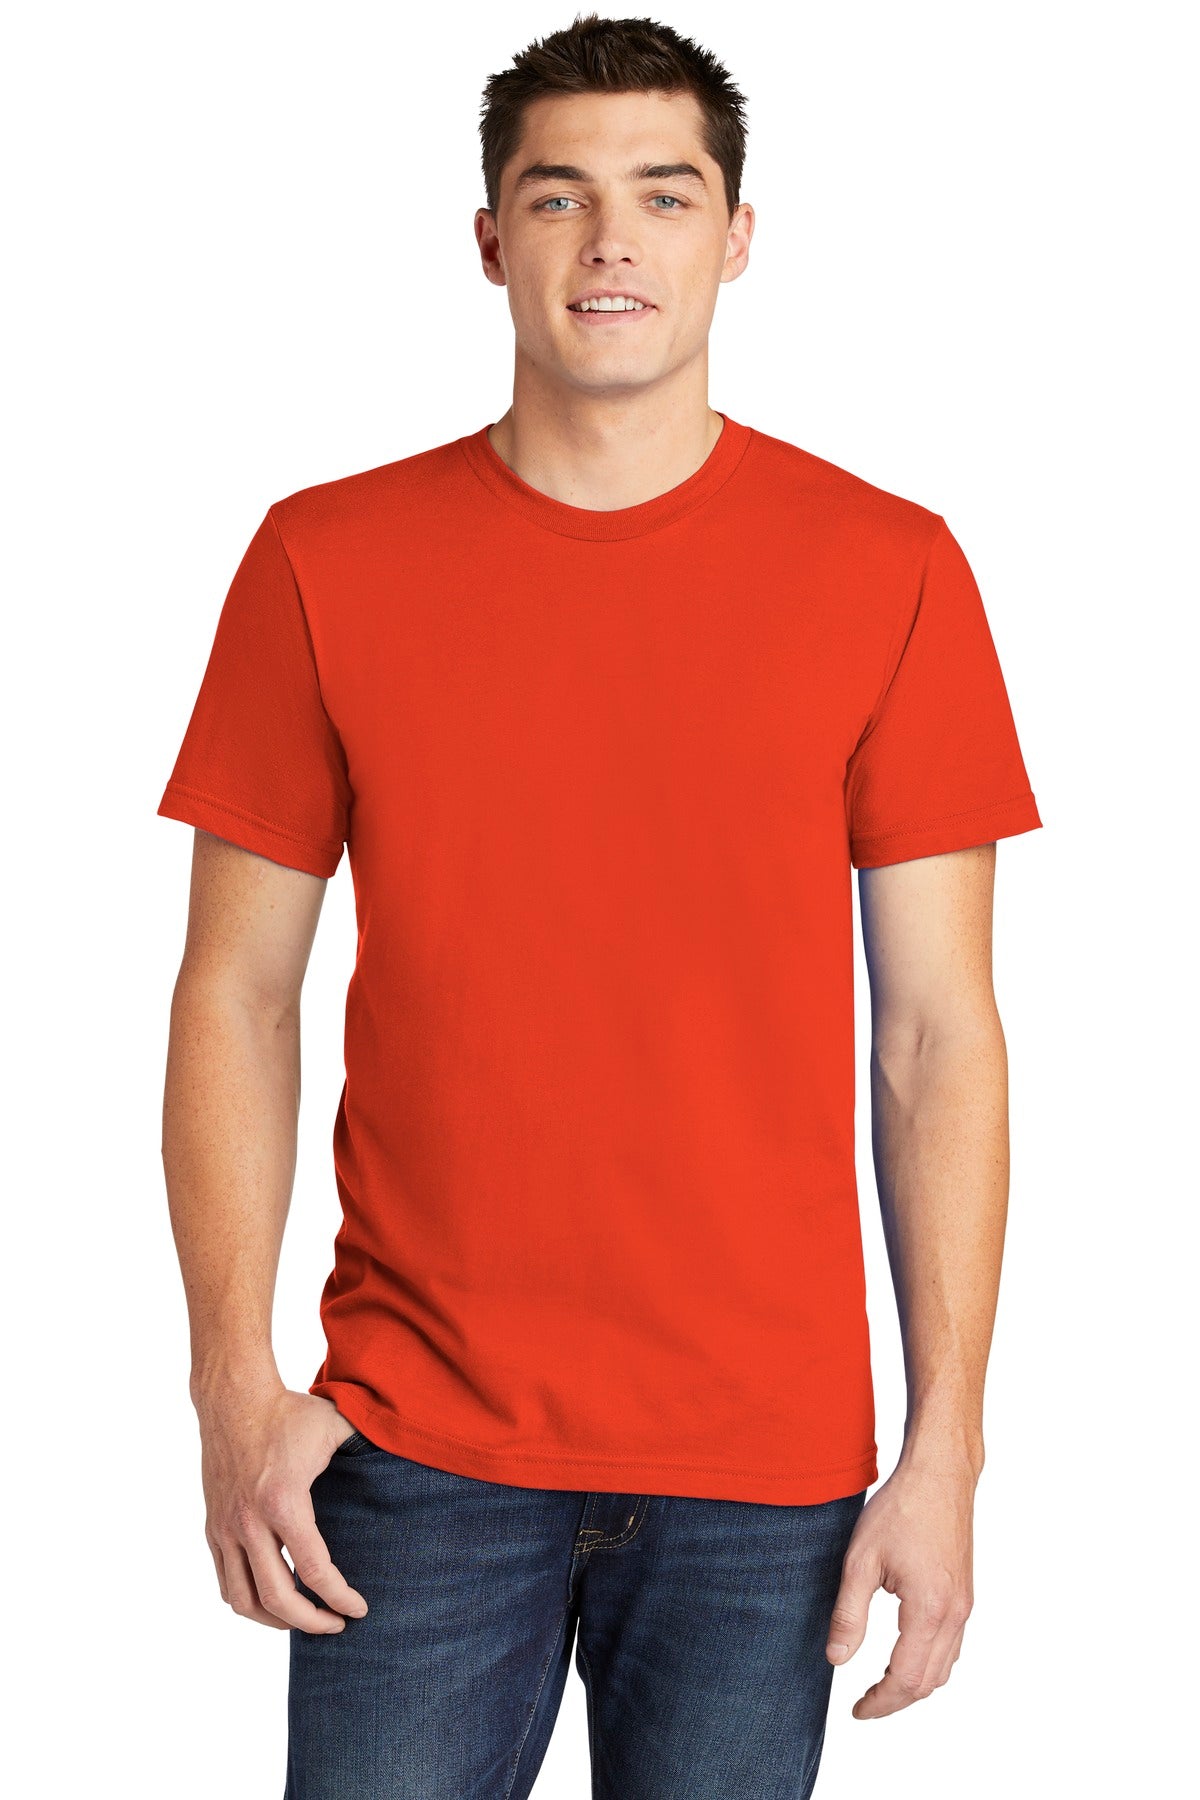 American Apparel ® Fine Jersey T-Shirt. 2001W [Orange] - DFW Impression